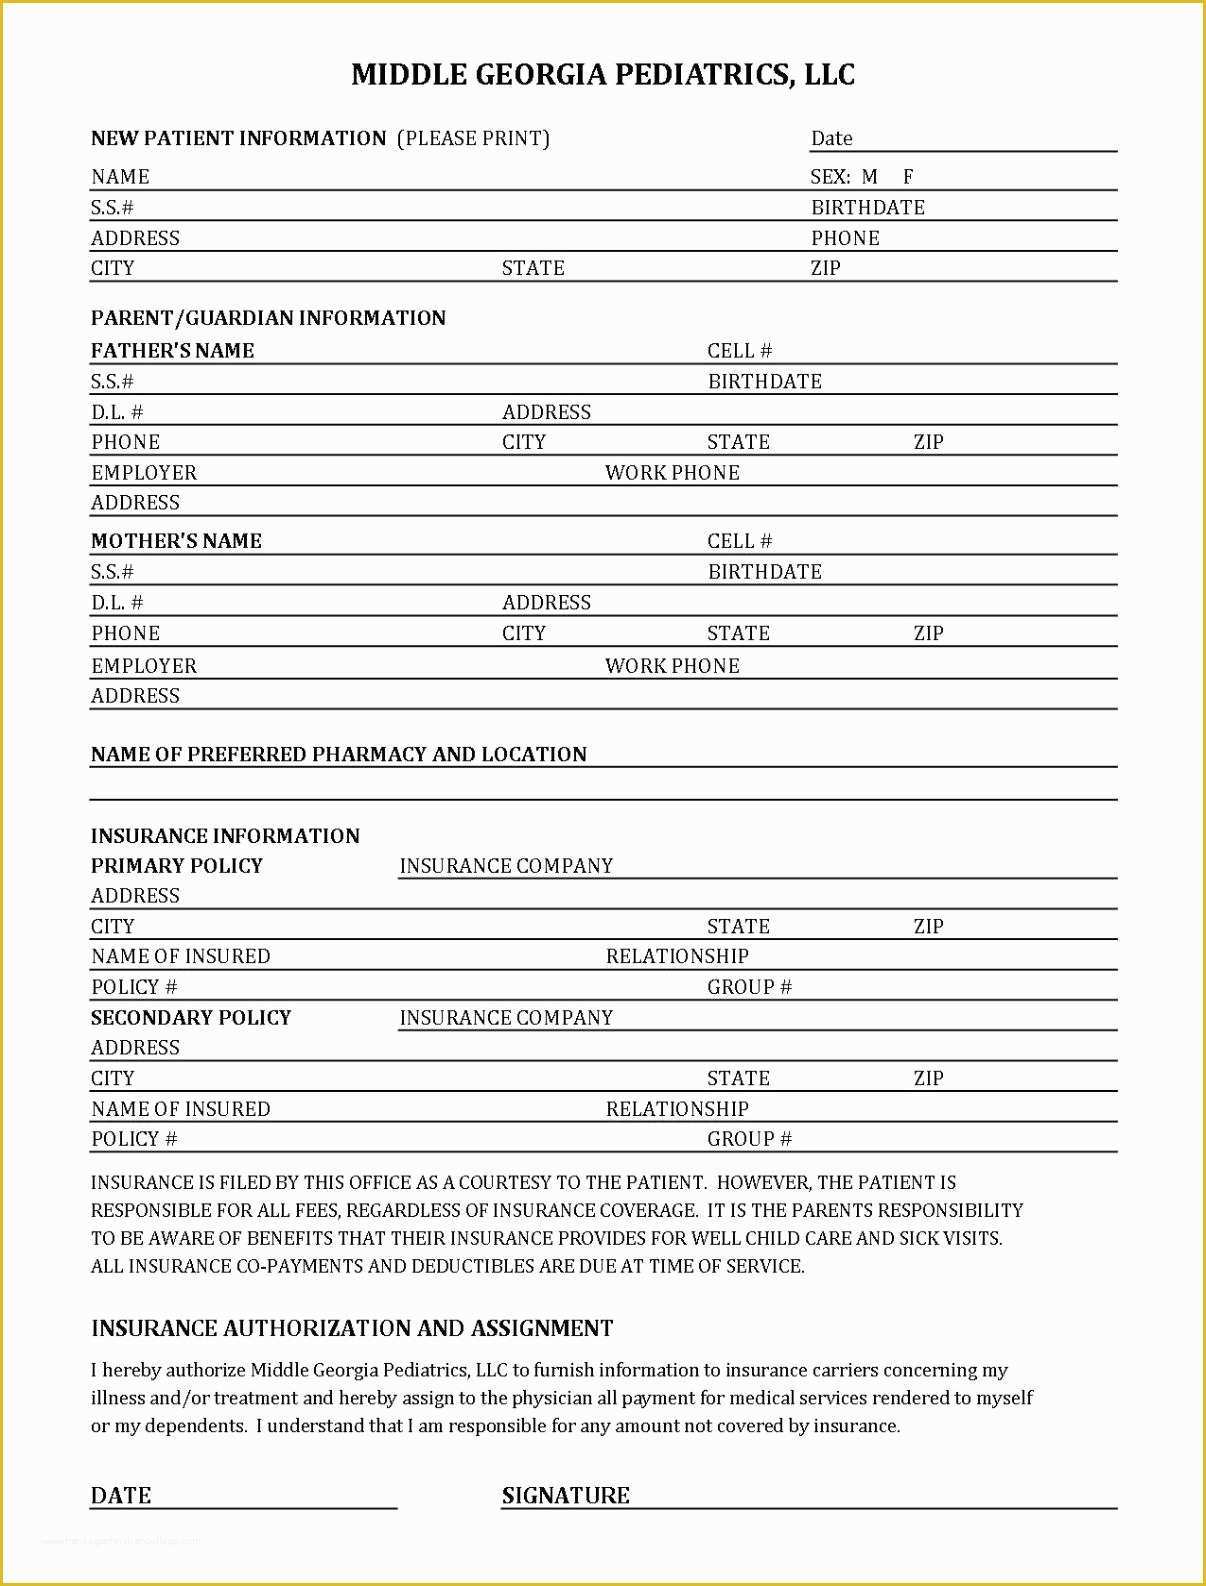 Free Patient Registration form Template Of Middle Georgia Pediatrics L L C New Patient